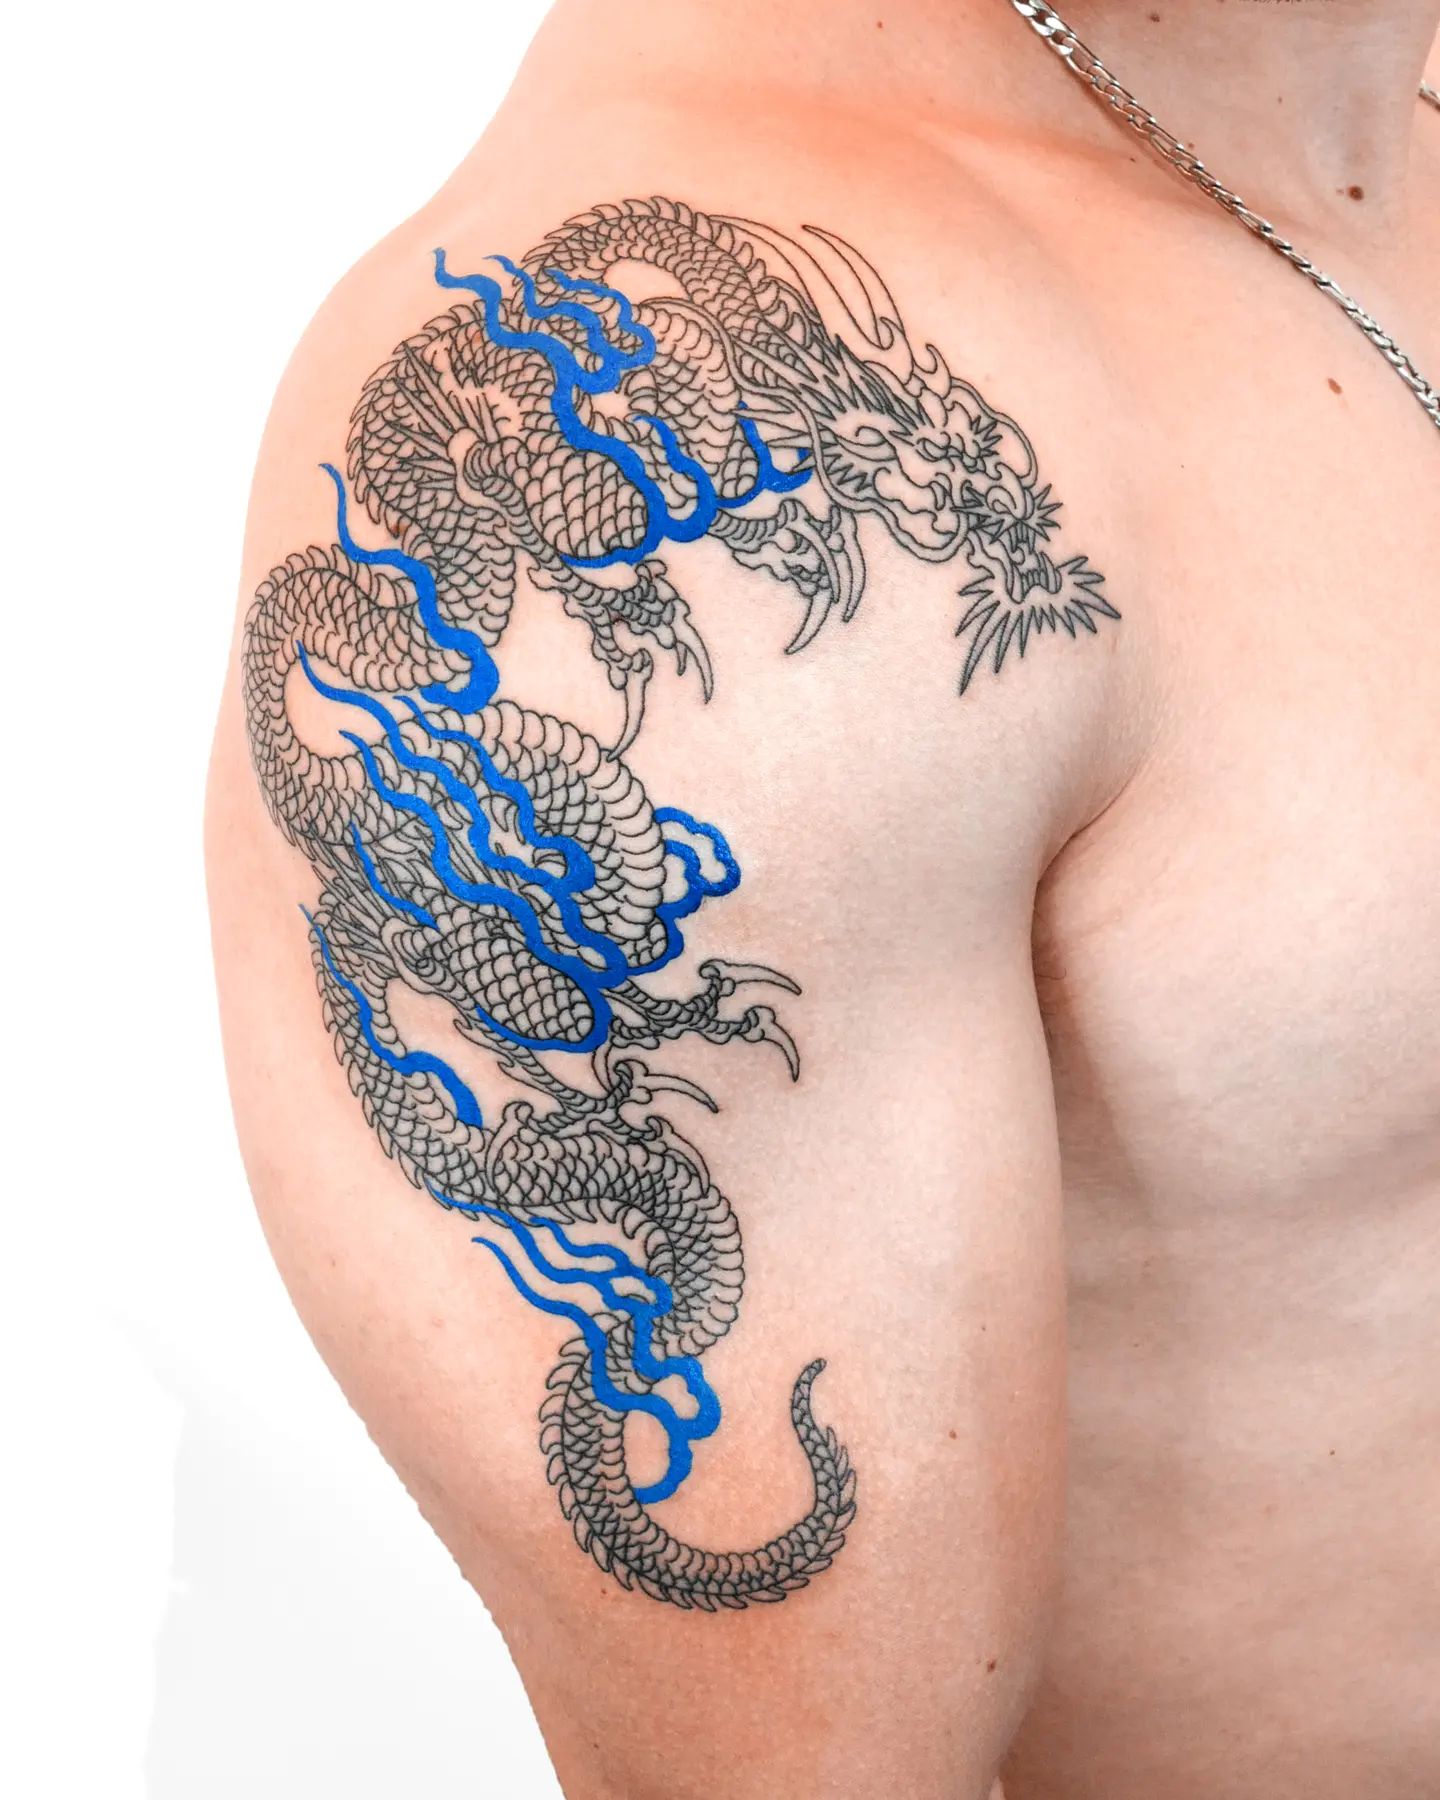 Tatuaje de Hombro con Tinta de Dragón.